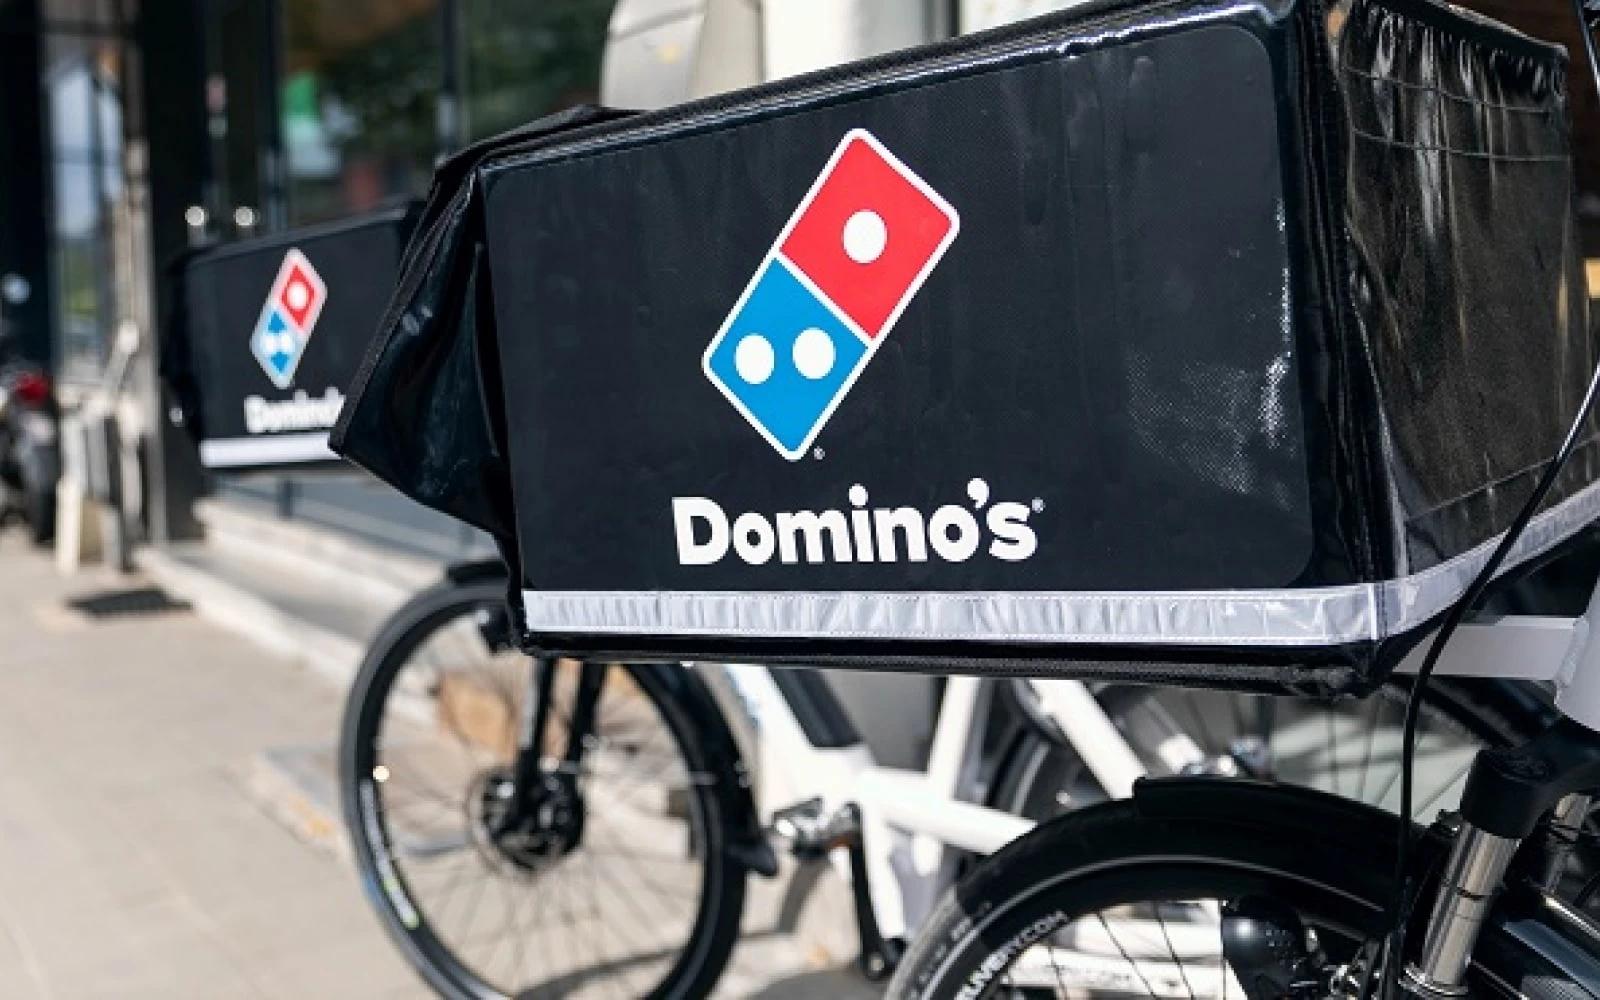 Pizza delivery bike